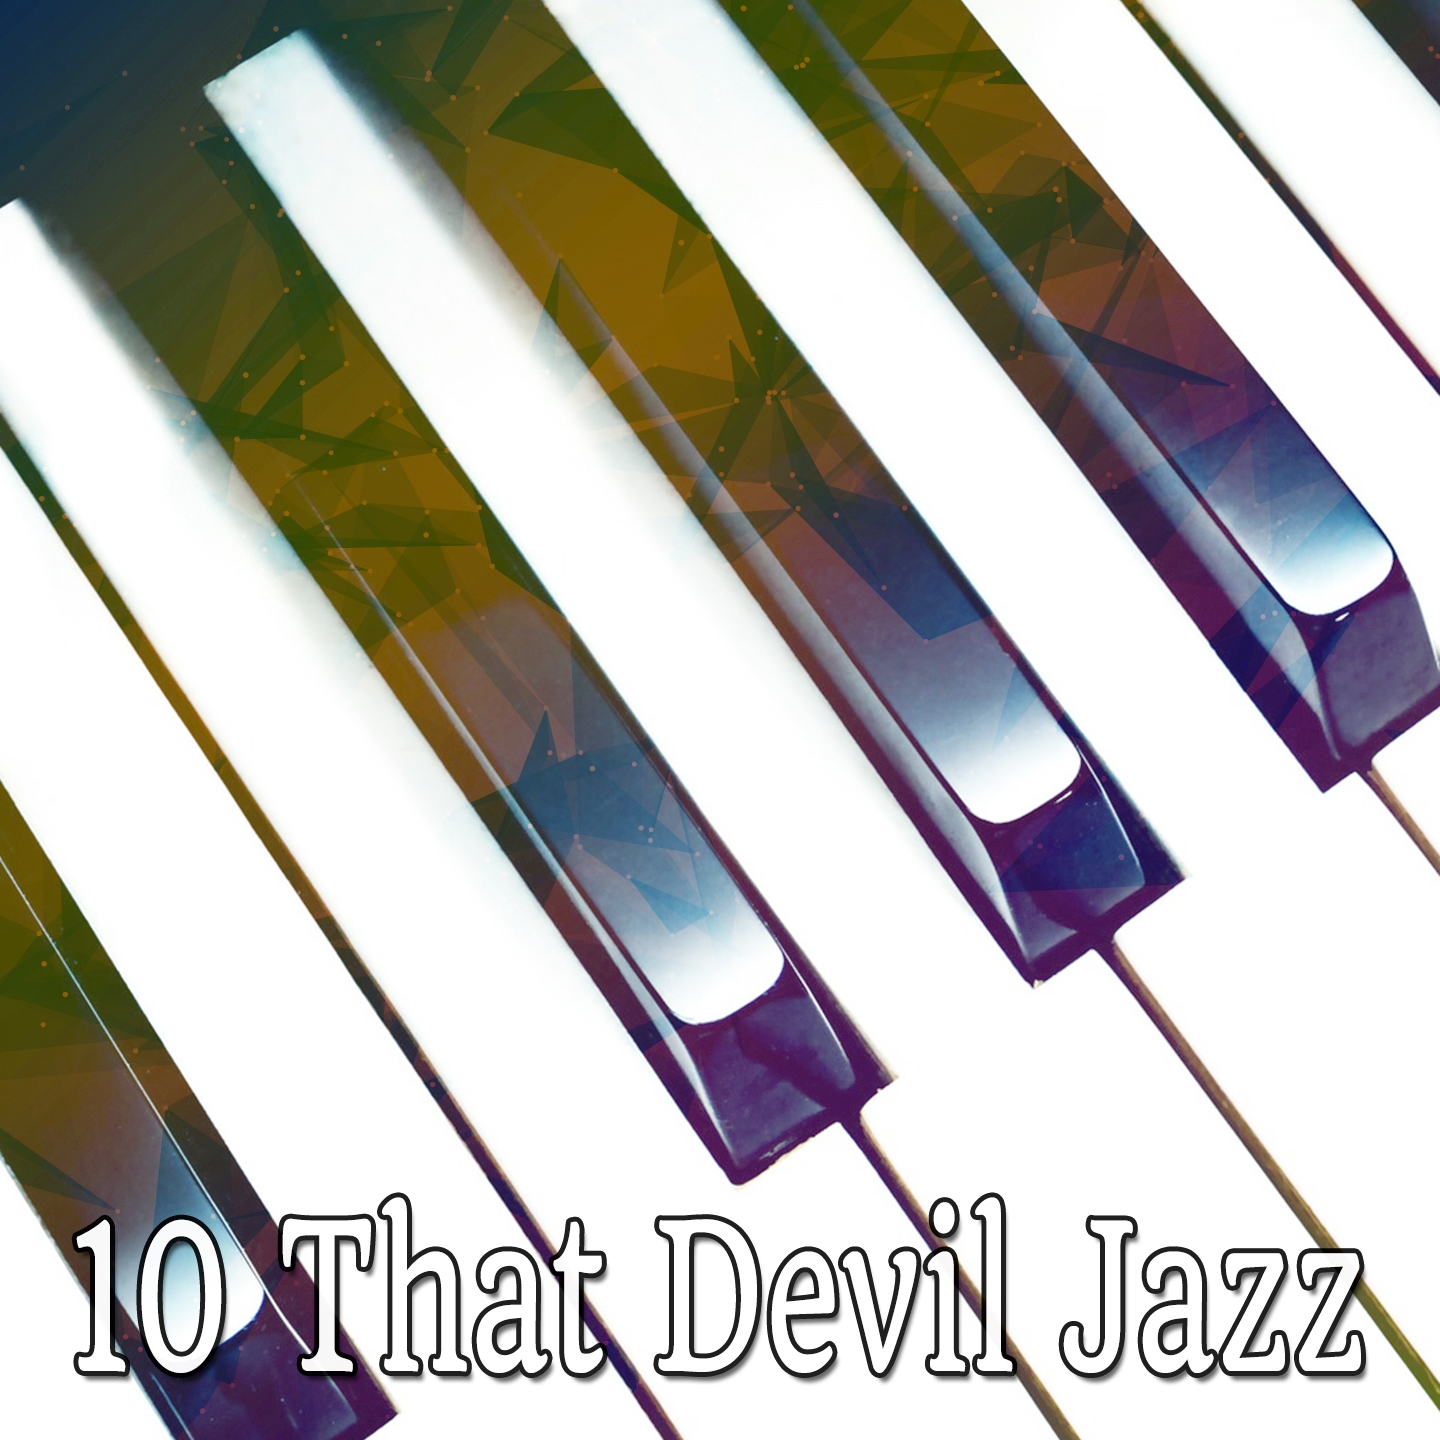 10 That Devil Jazz